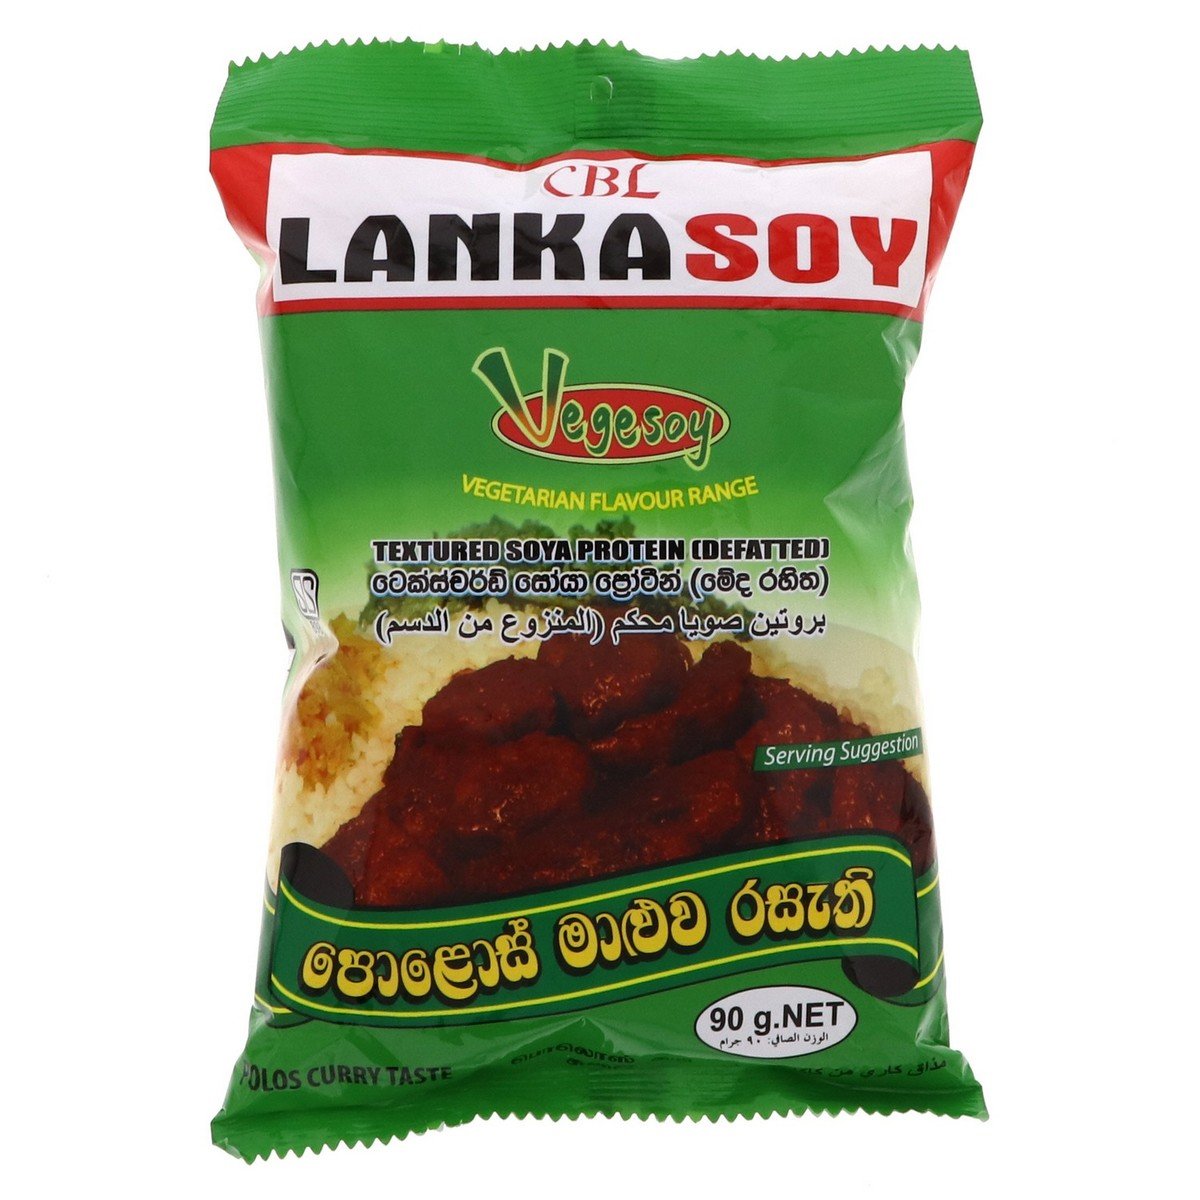 CBL Lanka Soy Vegesoy Polos Curry Taste 90 g